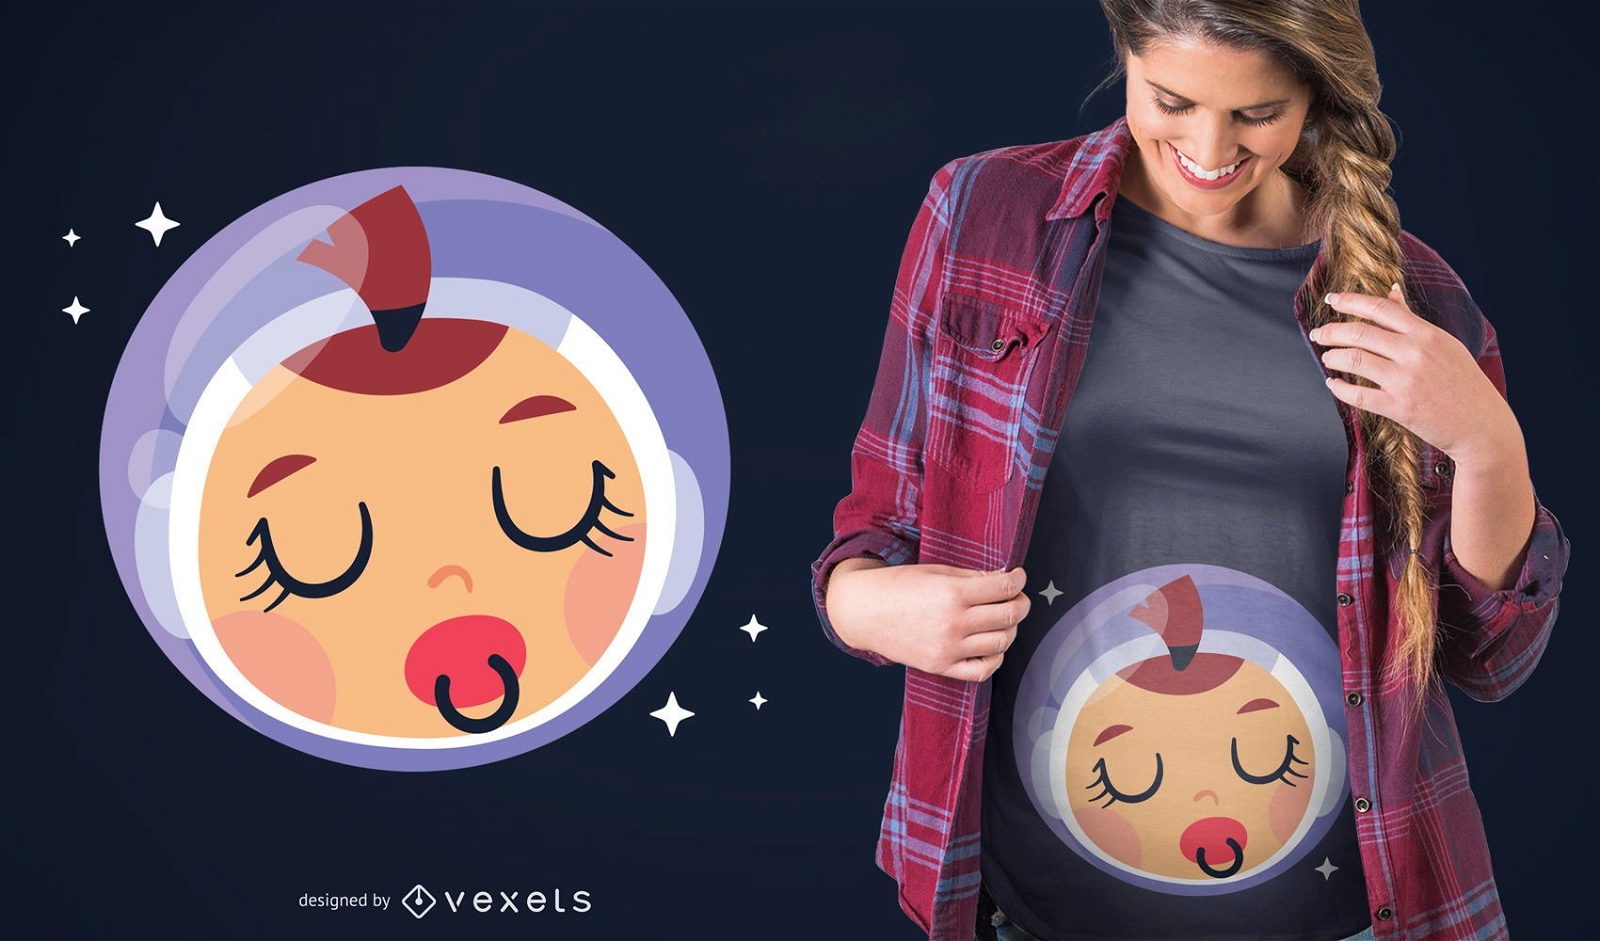 Diseño de camiseta Sleeping Baby Girl Astronaut